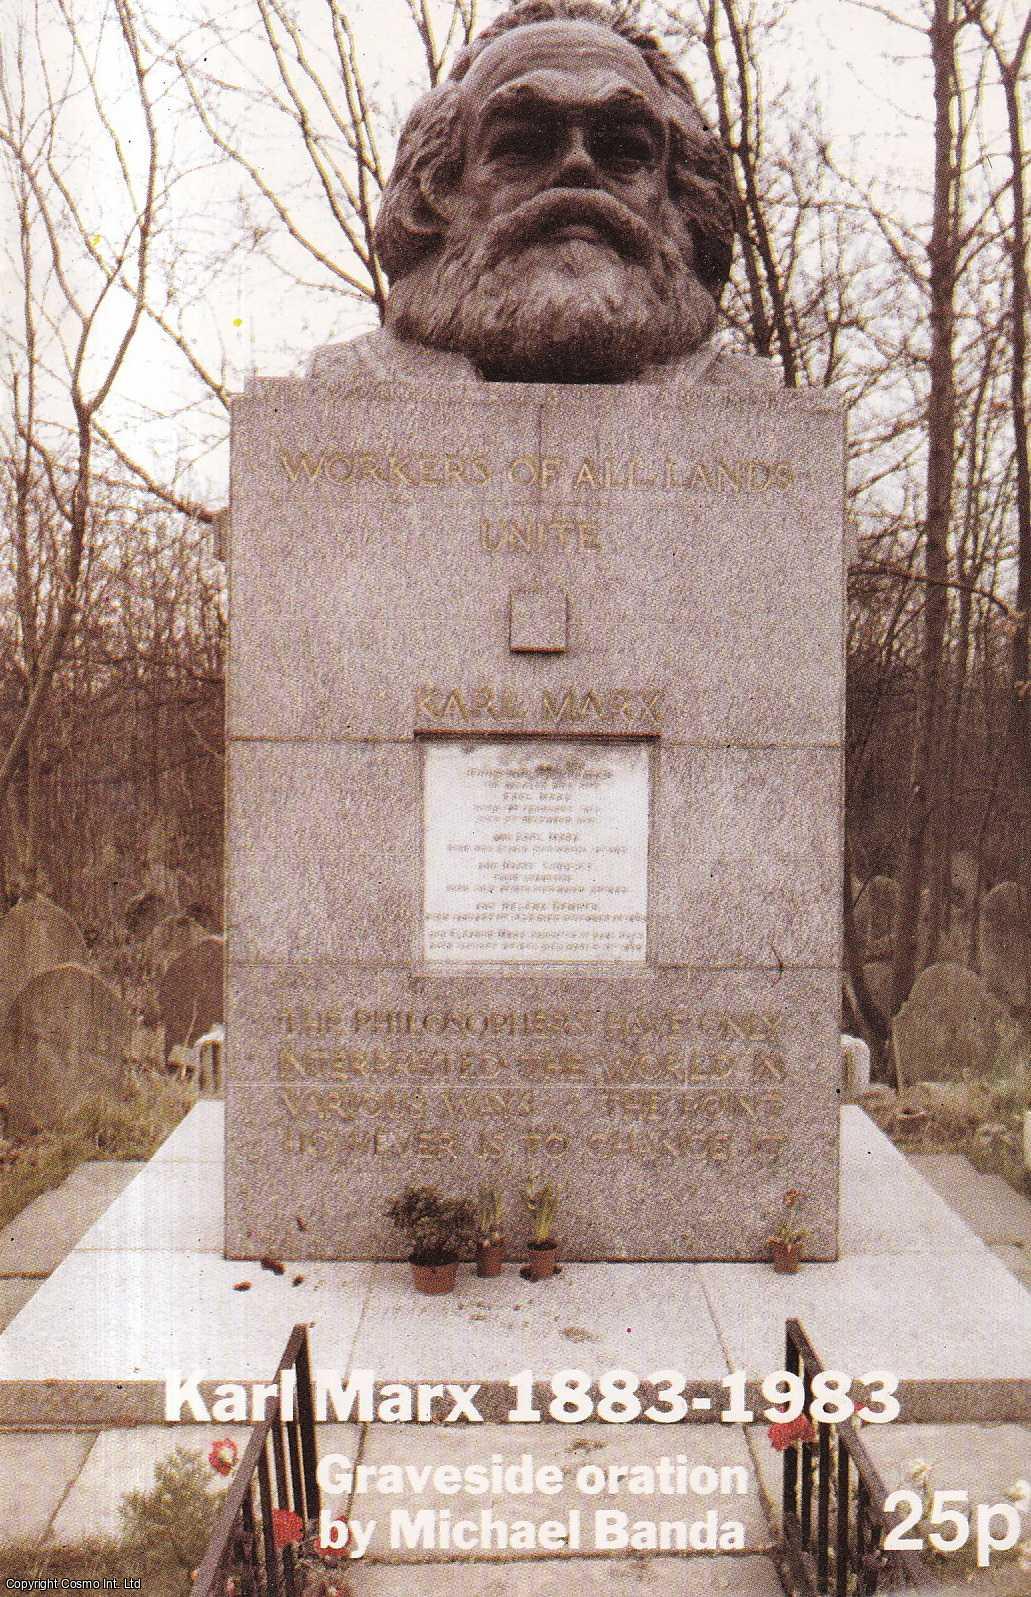 Michael Banda - Karl Marx 1883-1983. Graveside Oration by Michael Banda.